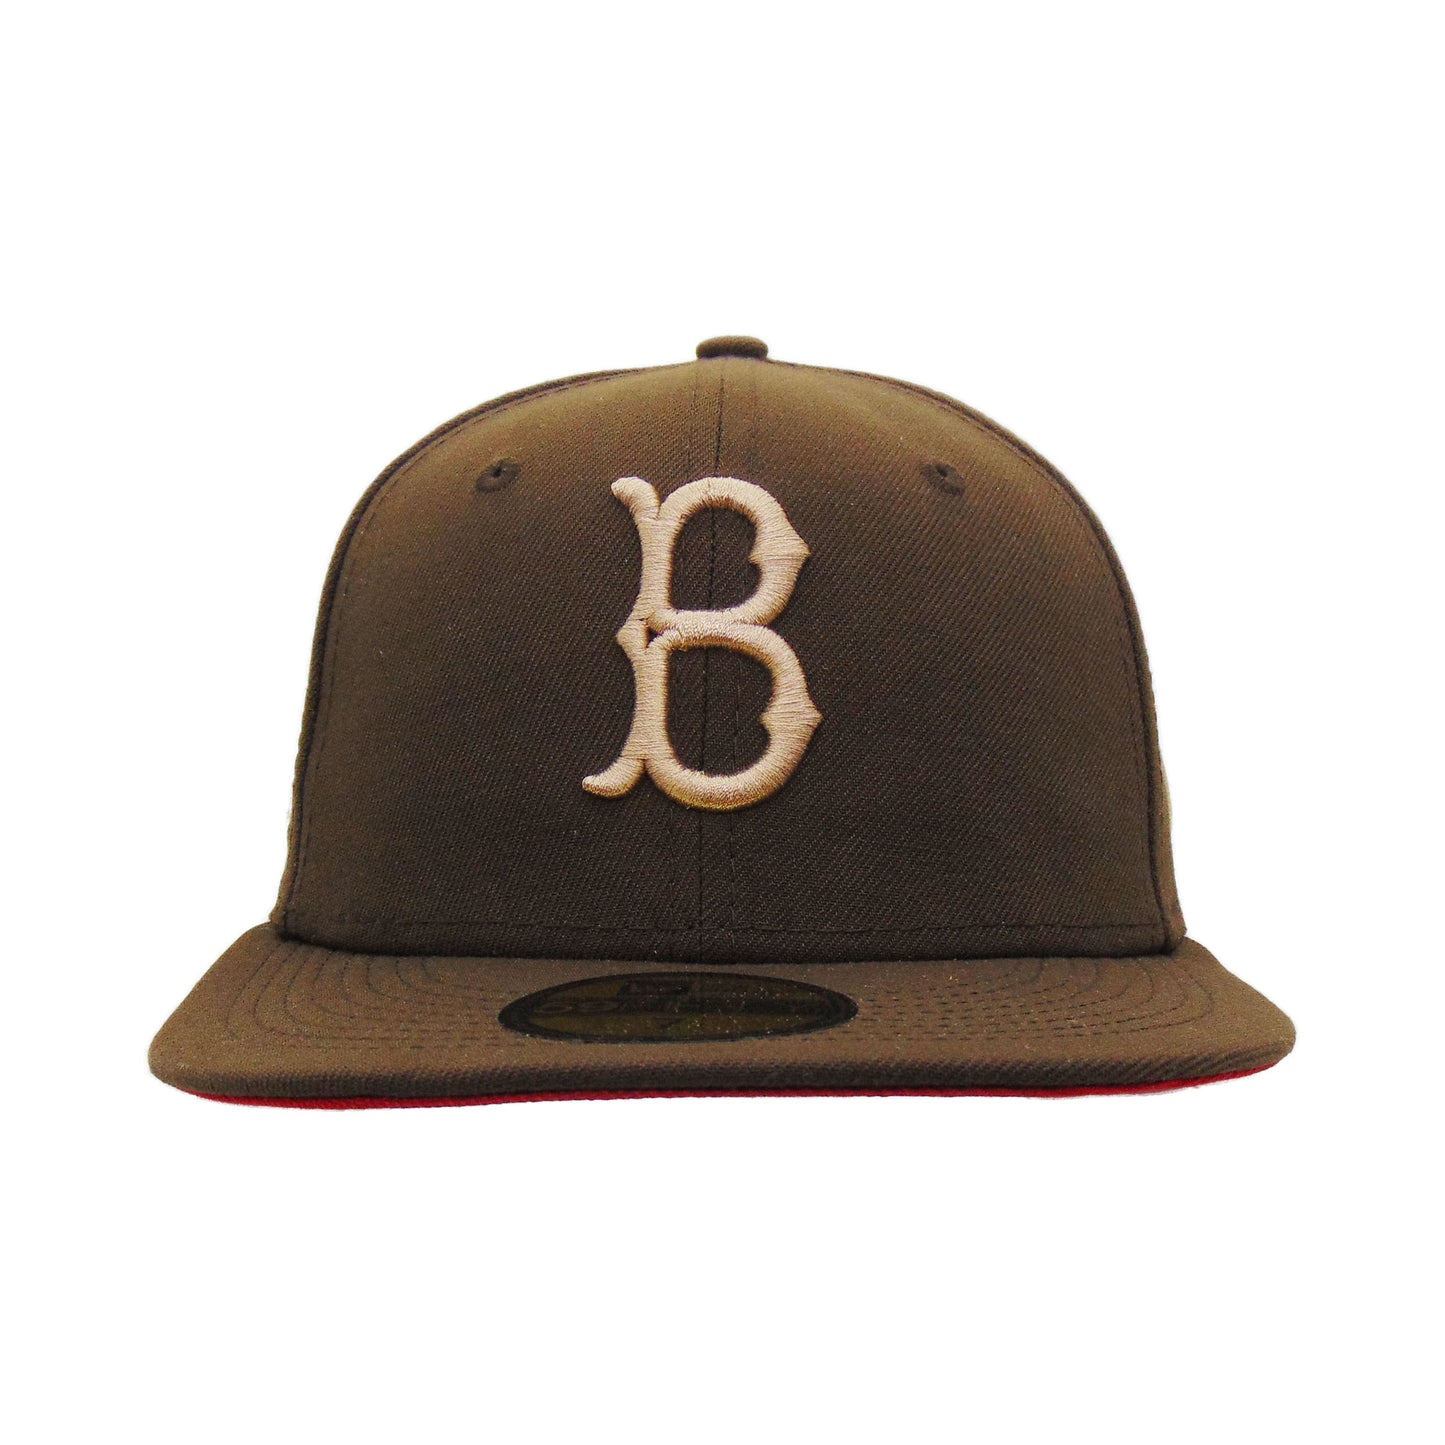 Brooklyn Dodgers jf Custom New Era Cap brown 1955